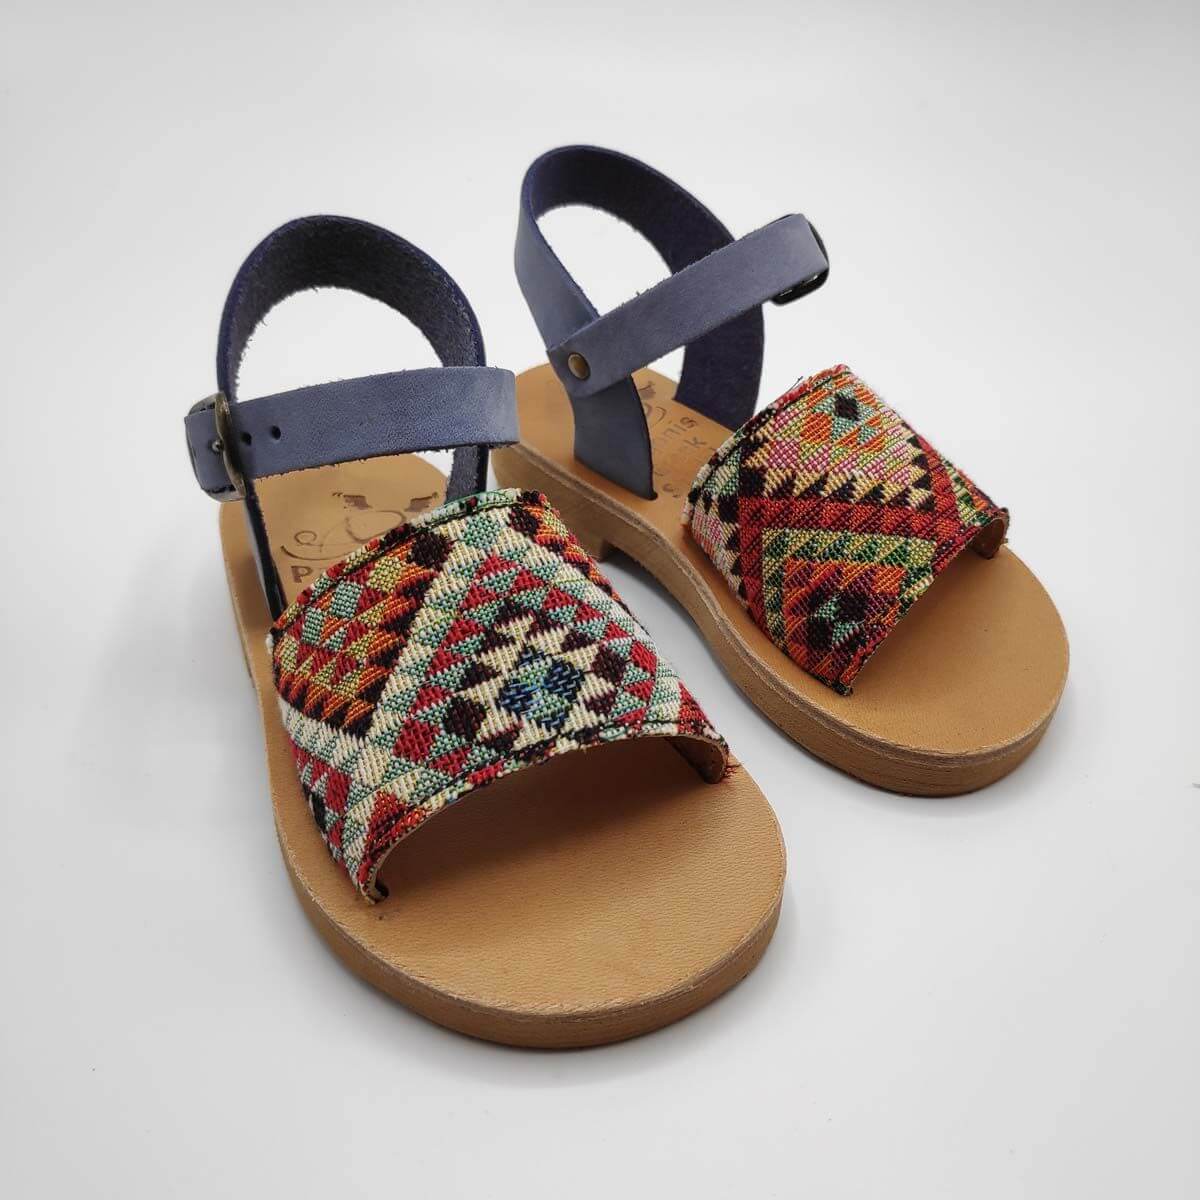 Toddler Sandals For Girls | Stafili Kids Fabric